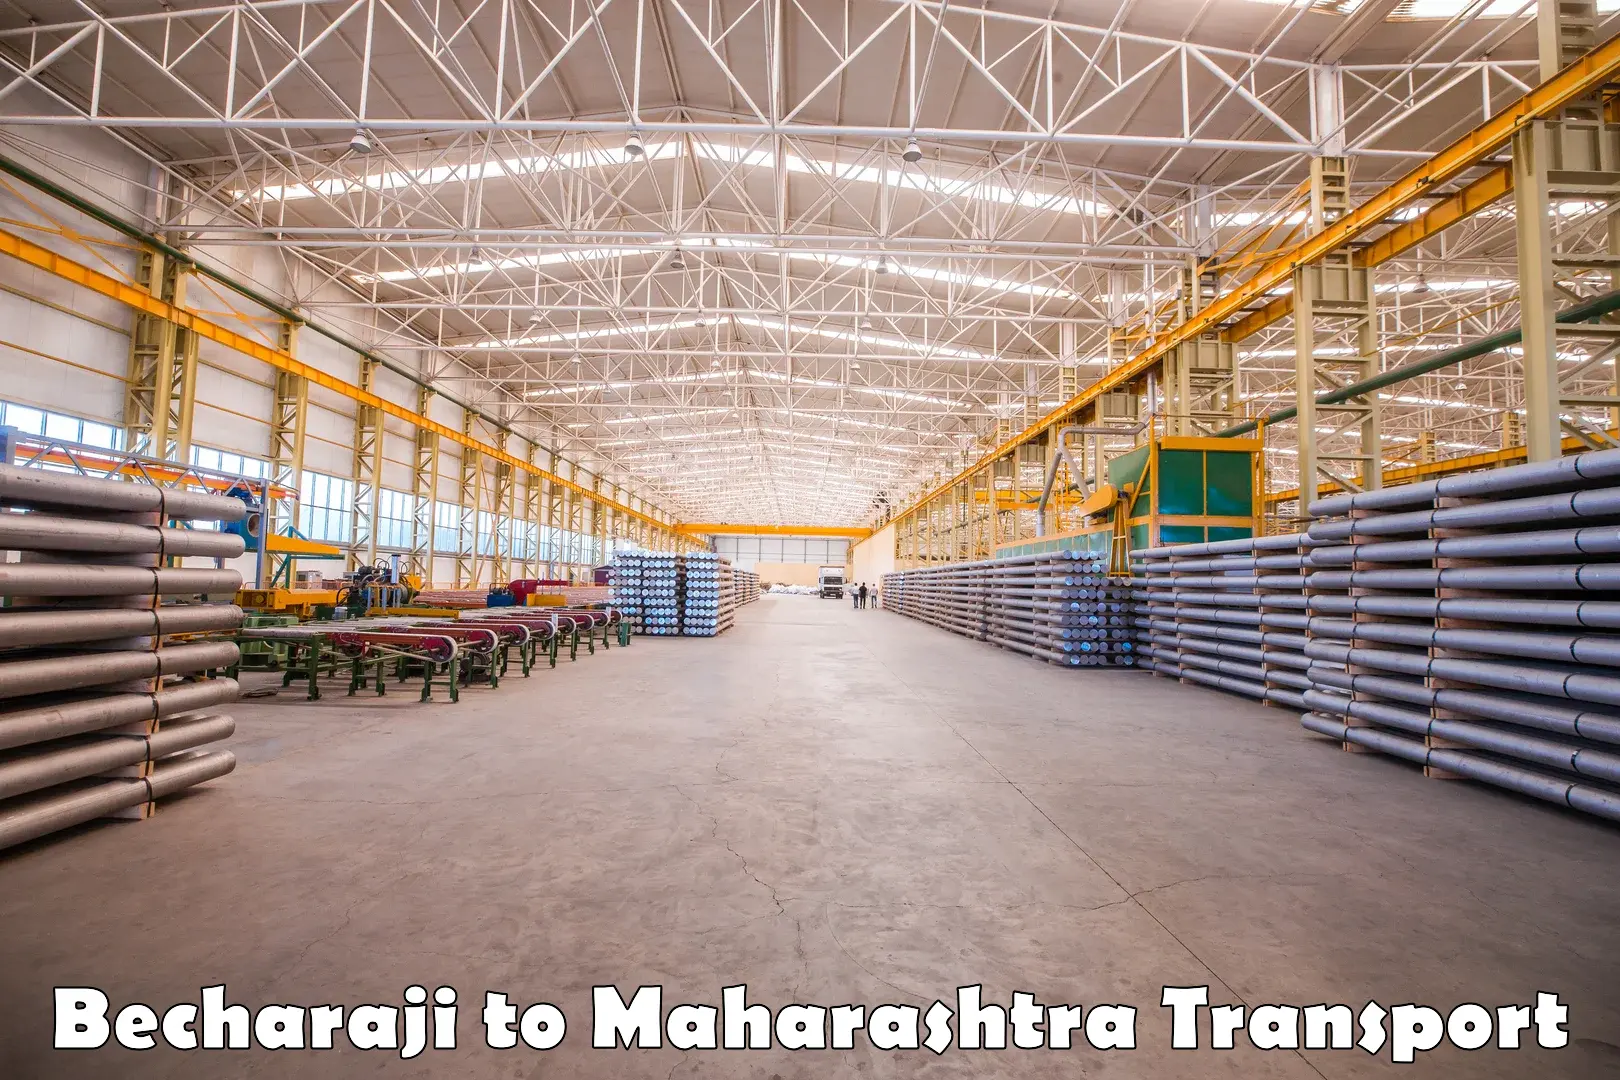 Truck transport companies in India Becharaji to Lonavala